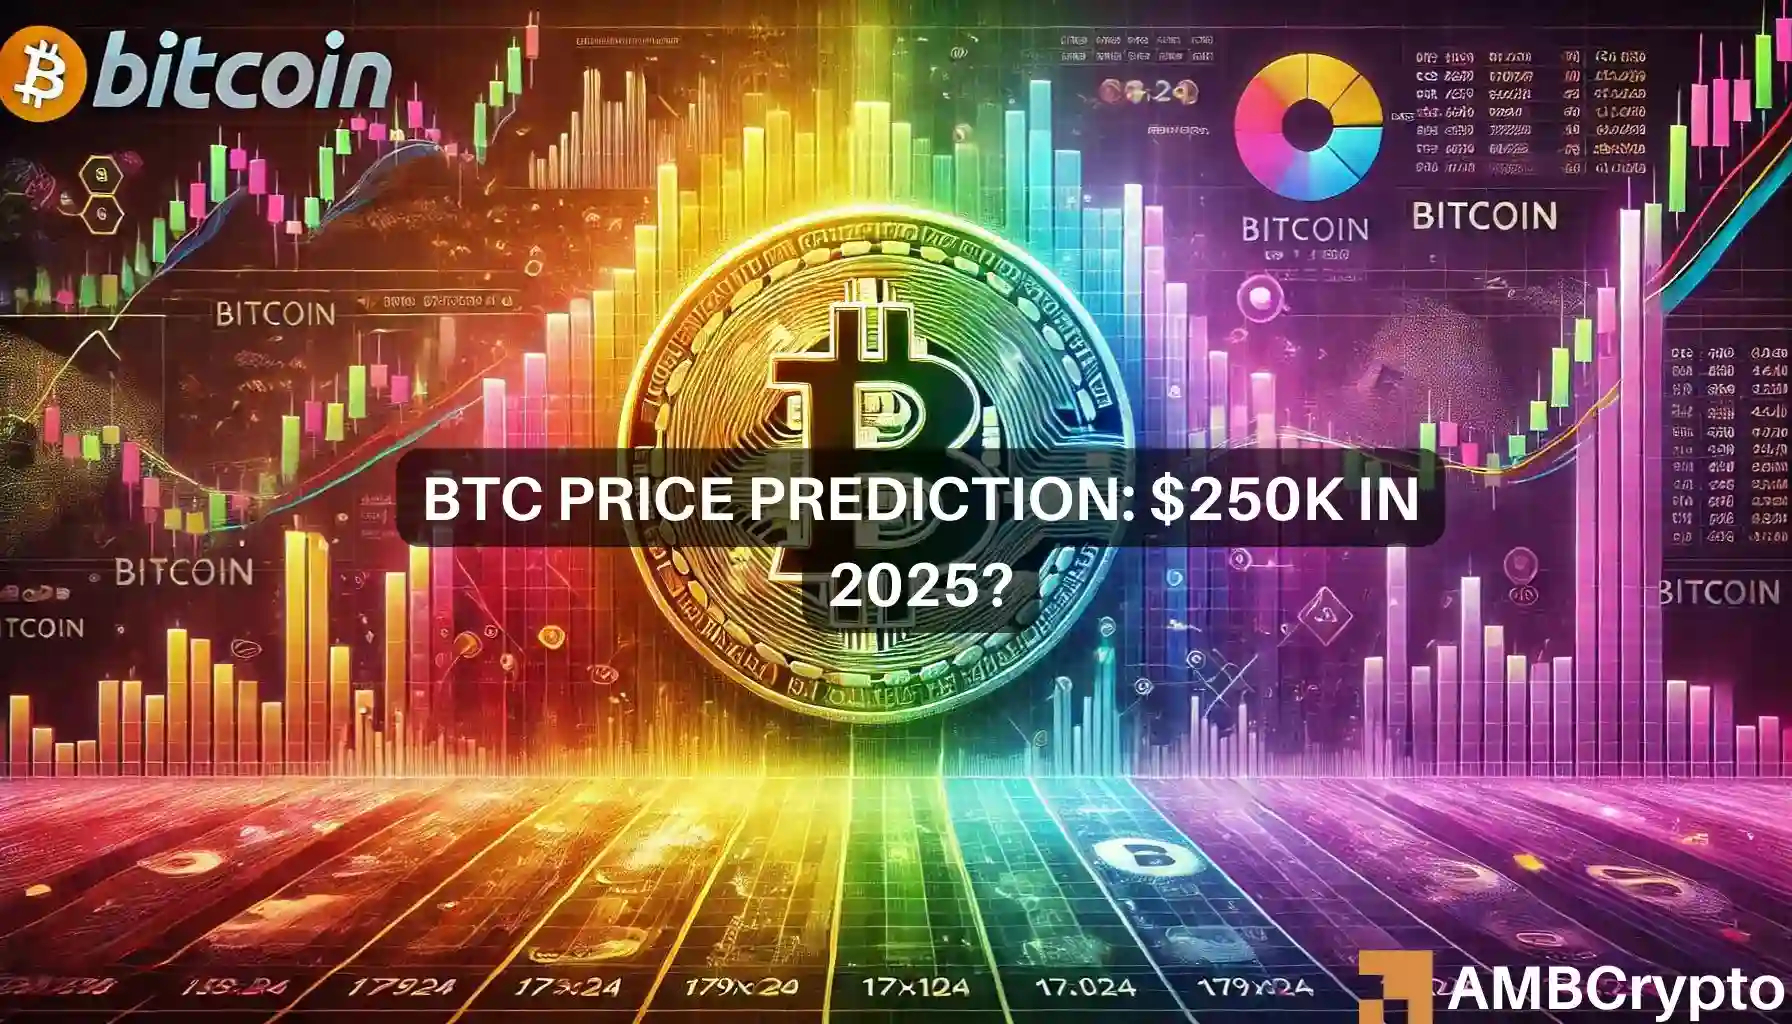 Bitcoin Rainbow Chart says BTC will reach $250K! Will the prediction come true?